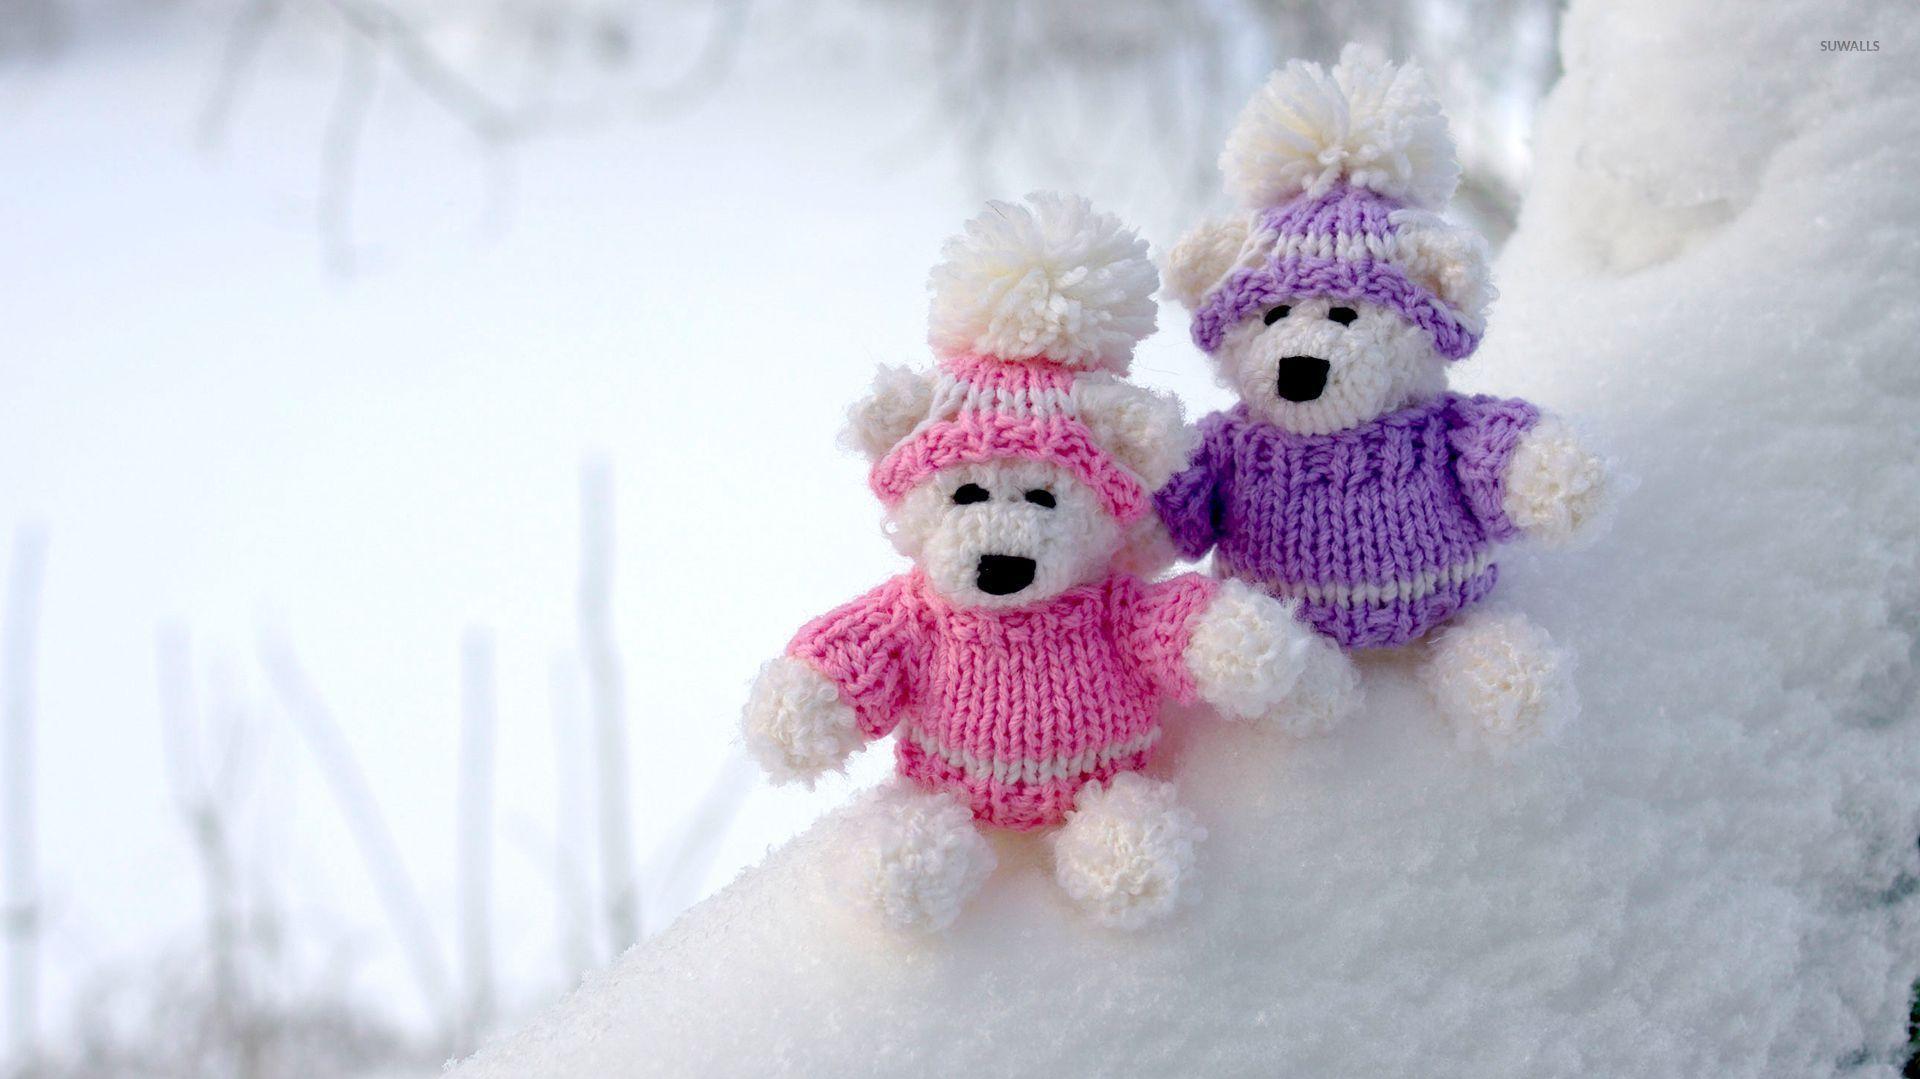 Teddy bear couple on snowy ground wallpaper   Photography